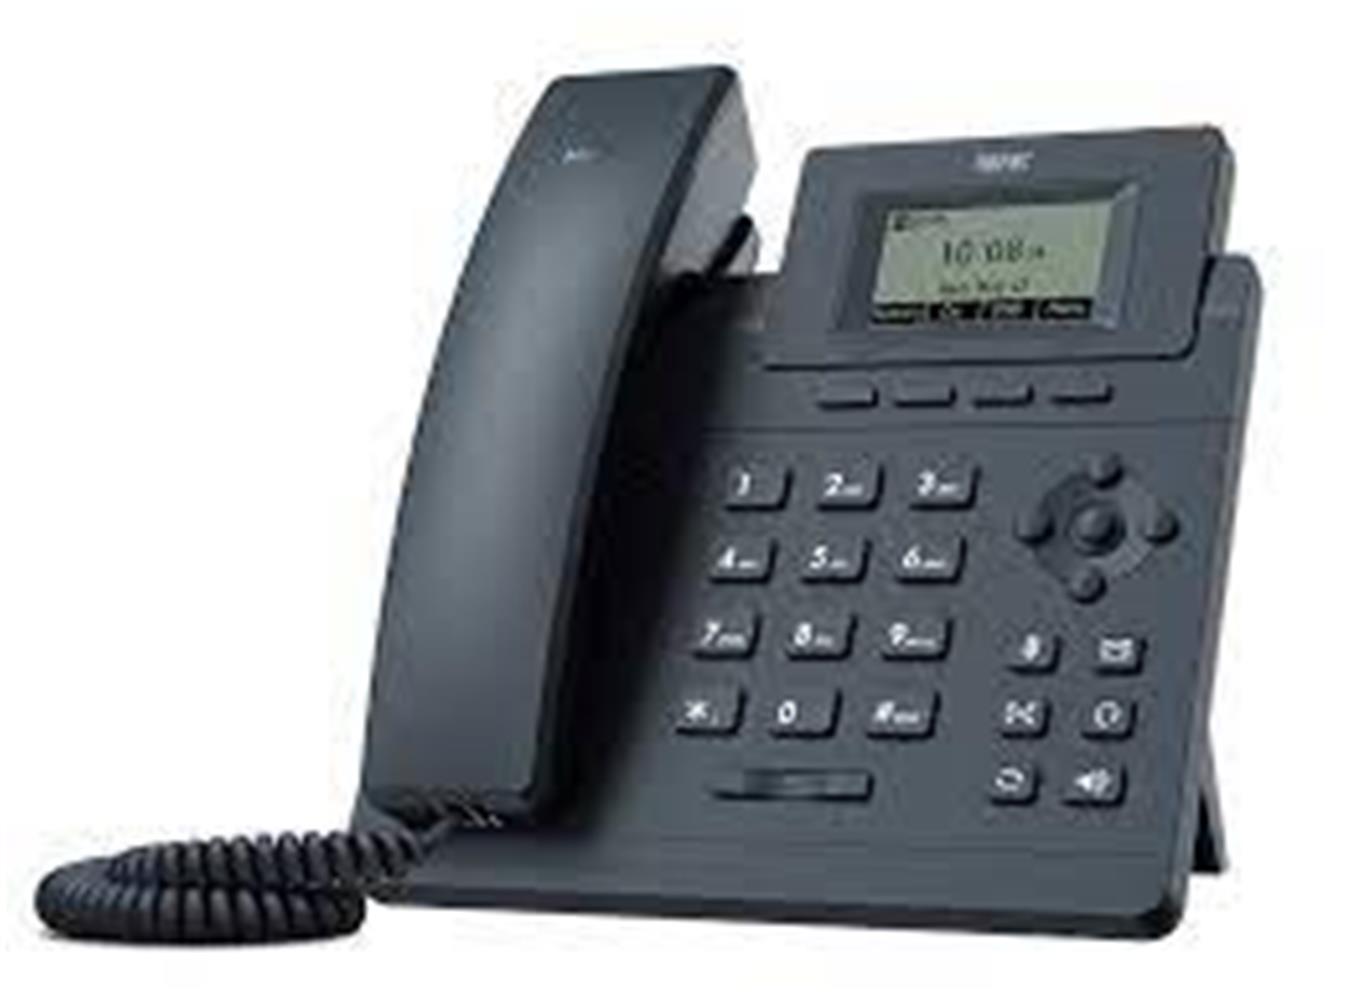 KAREL IP310P MASA USTU POE IP TELEFON